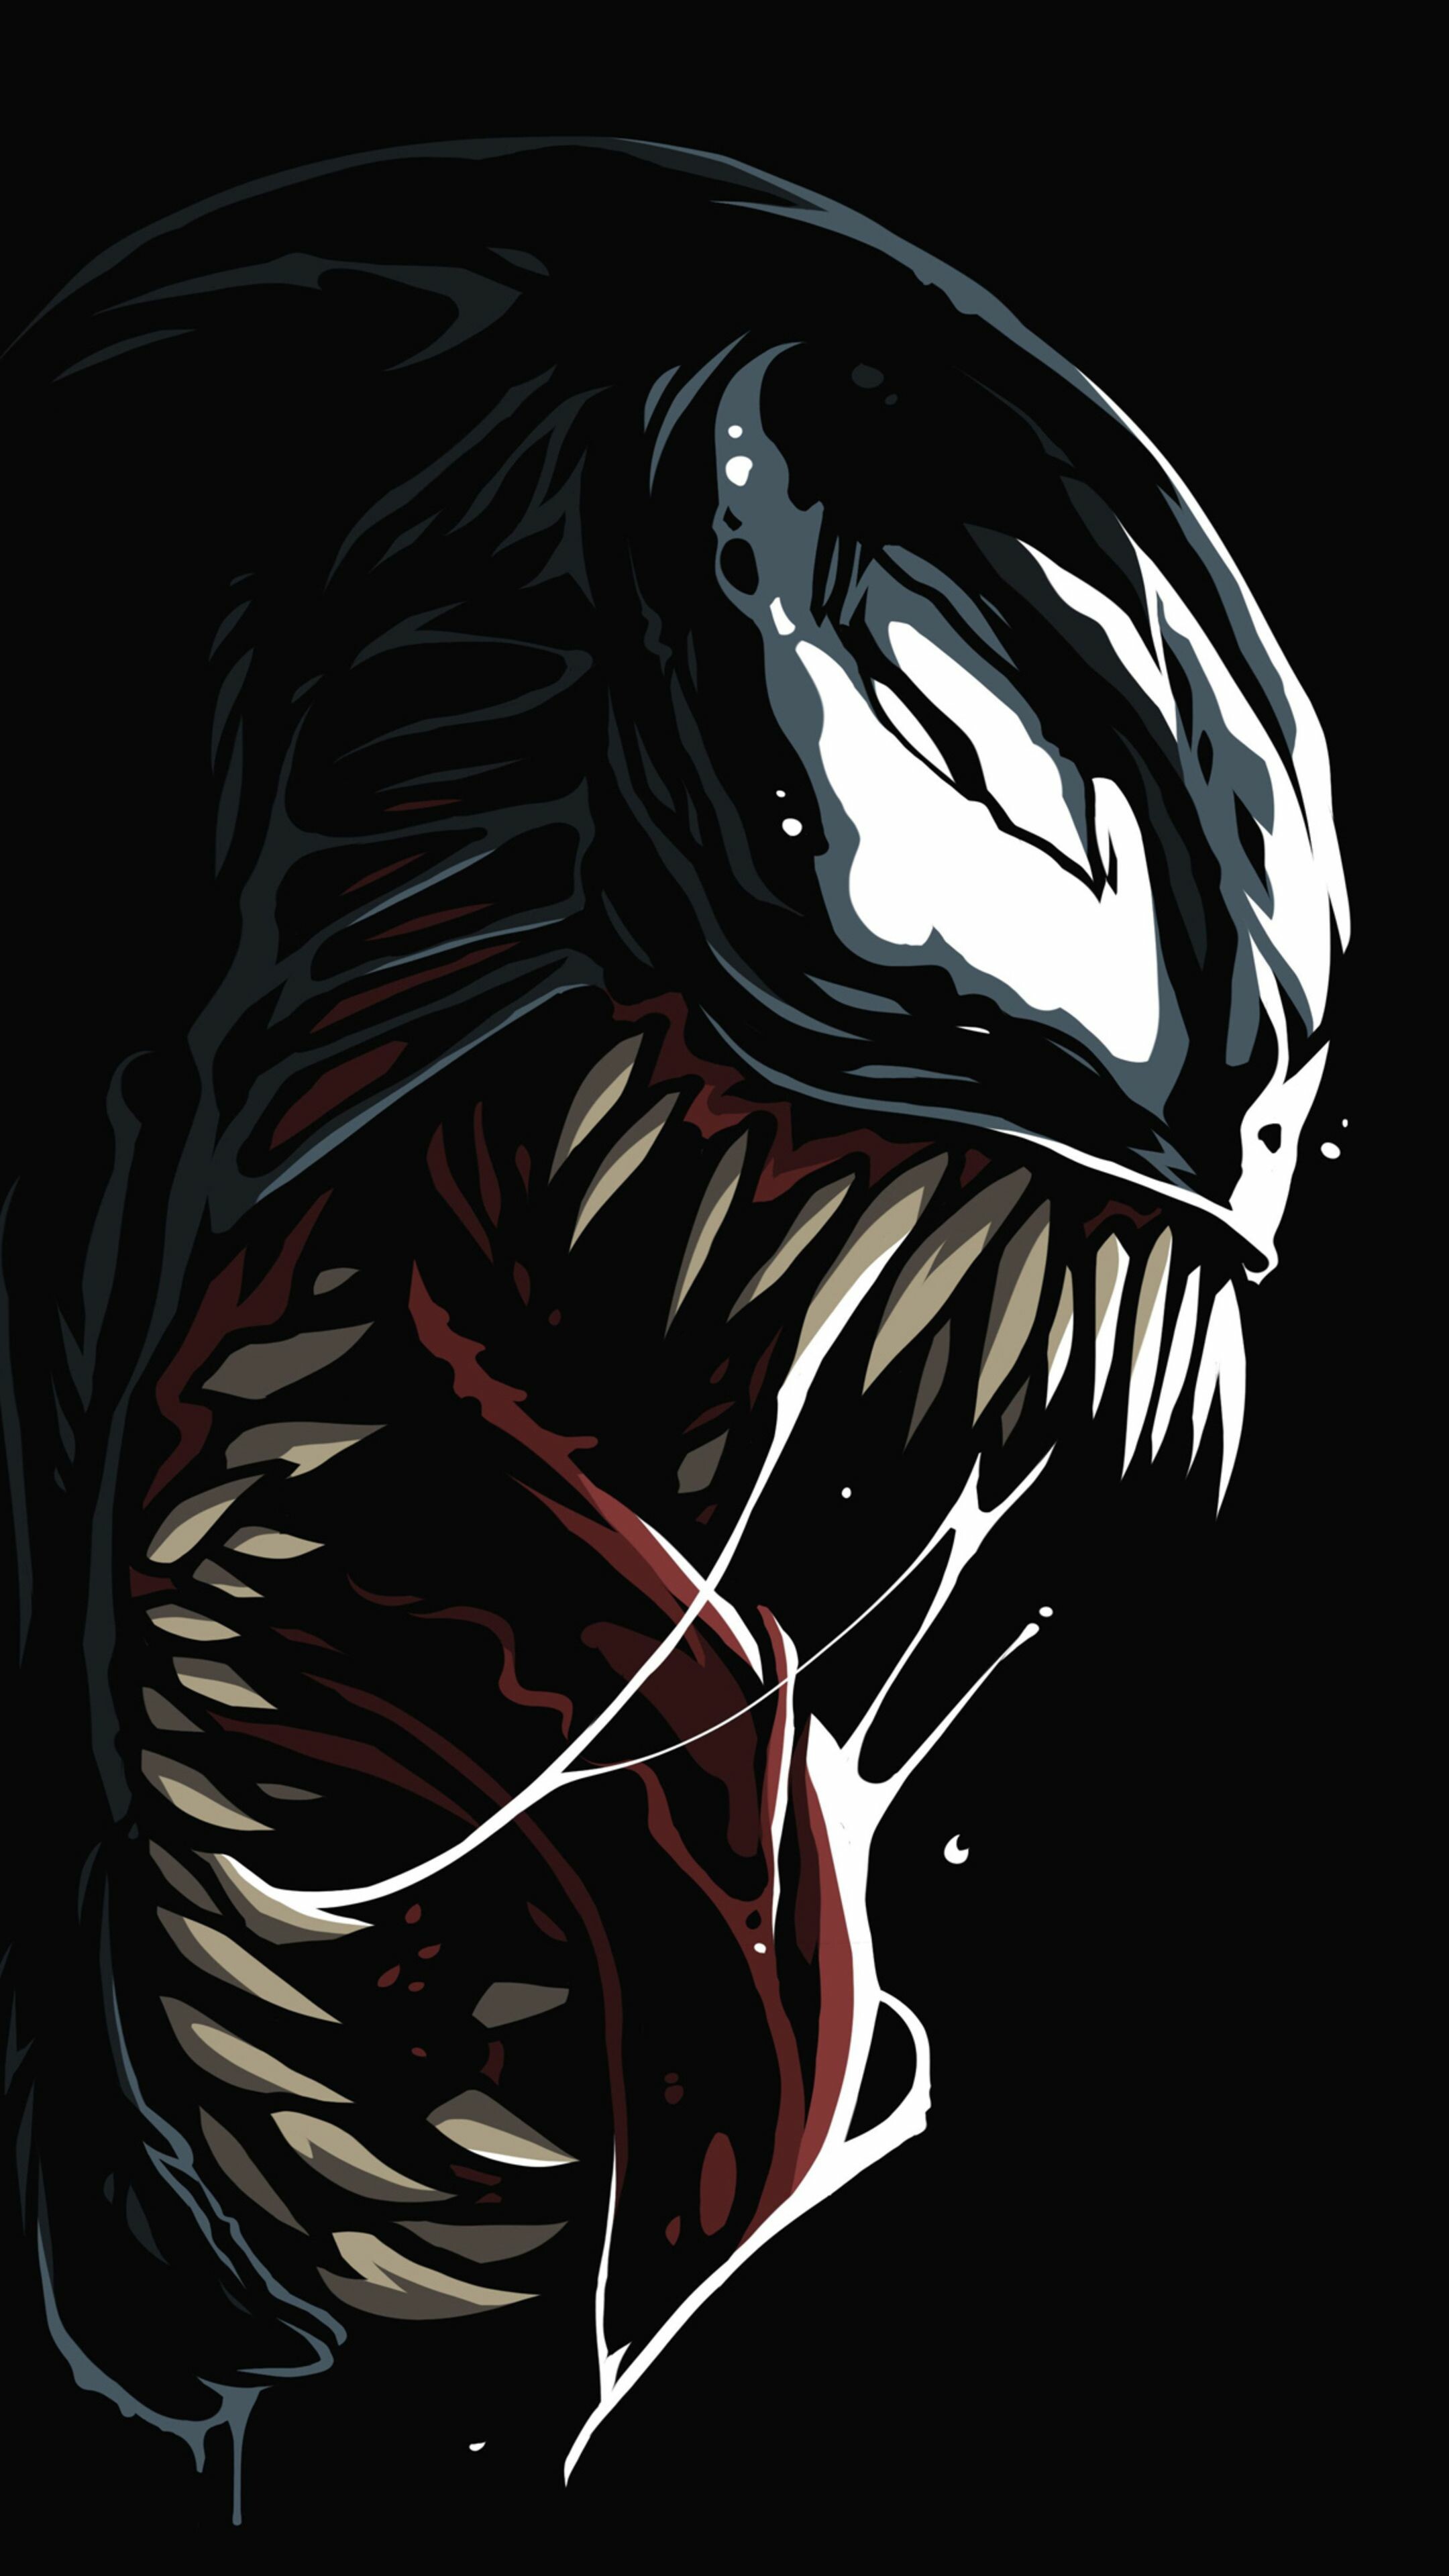 Venom Wallpaper 4k & HD for Android - Download | Cafe Bazaar